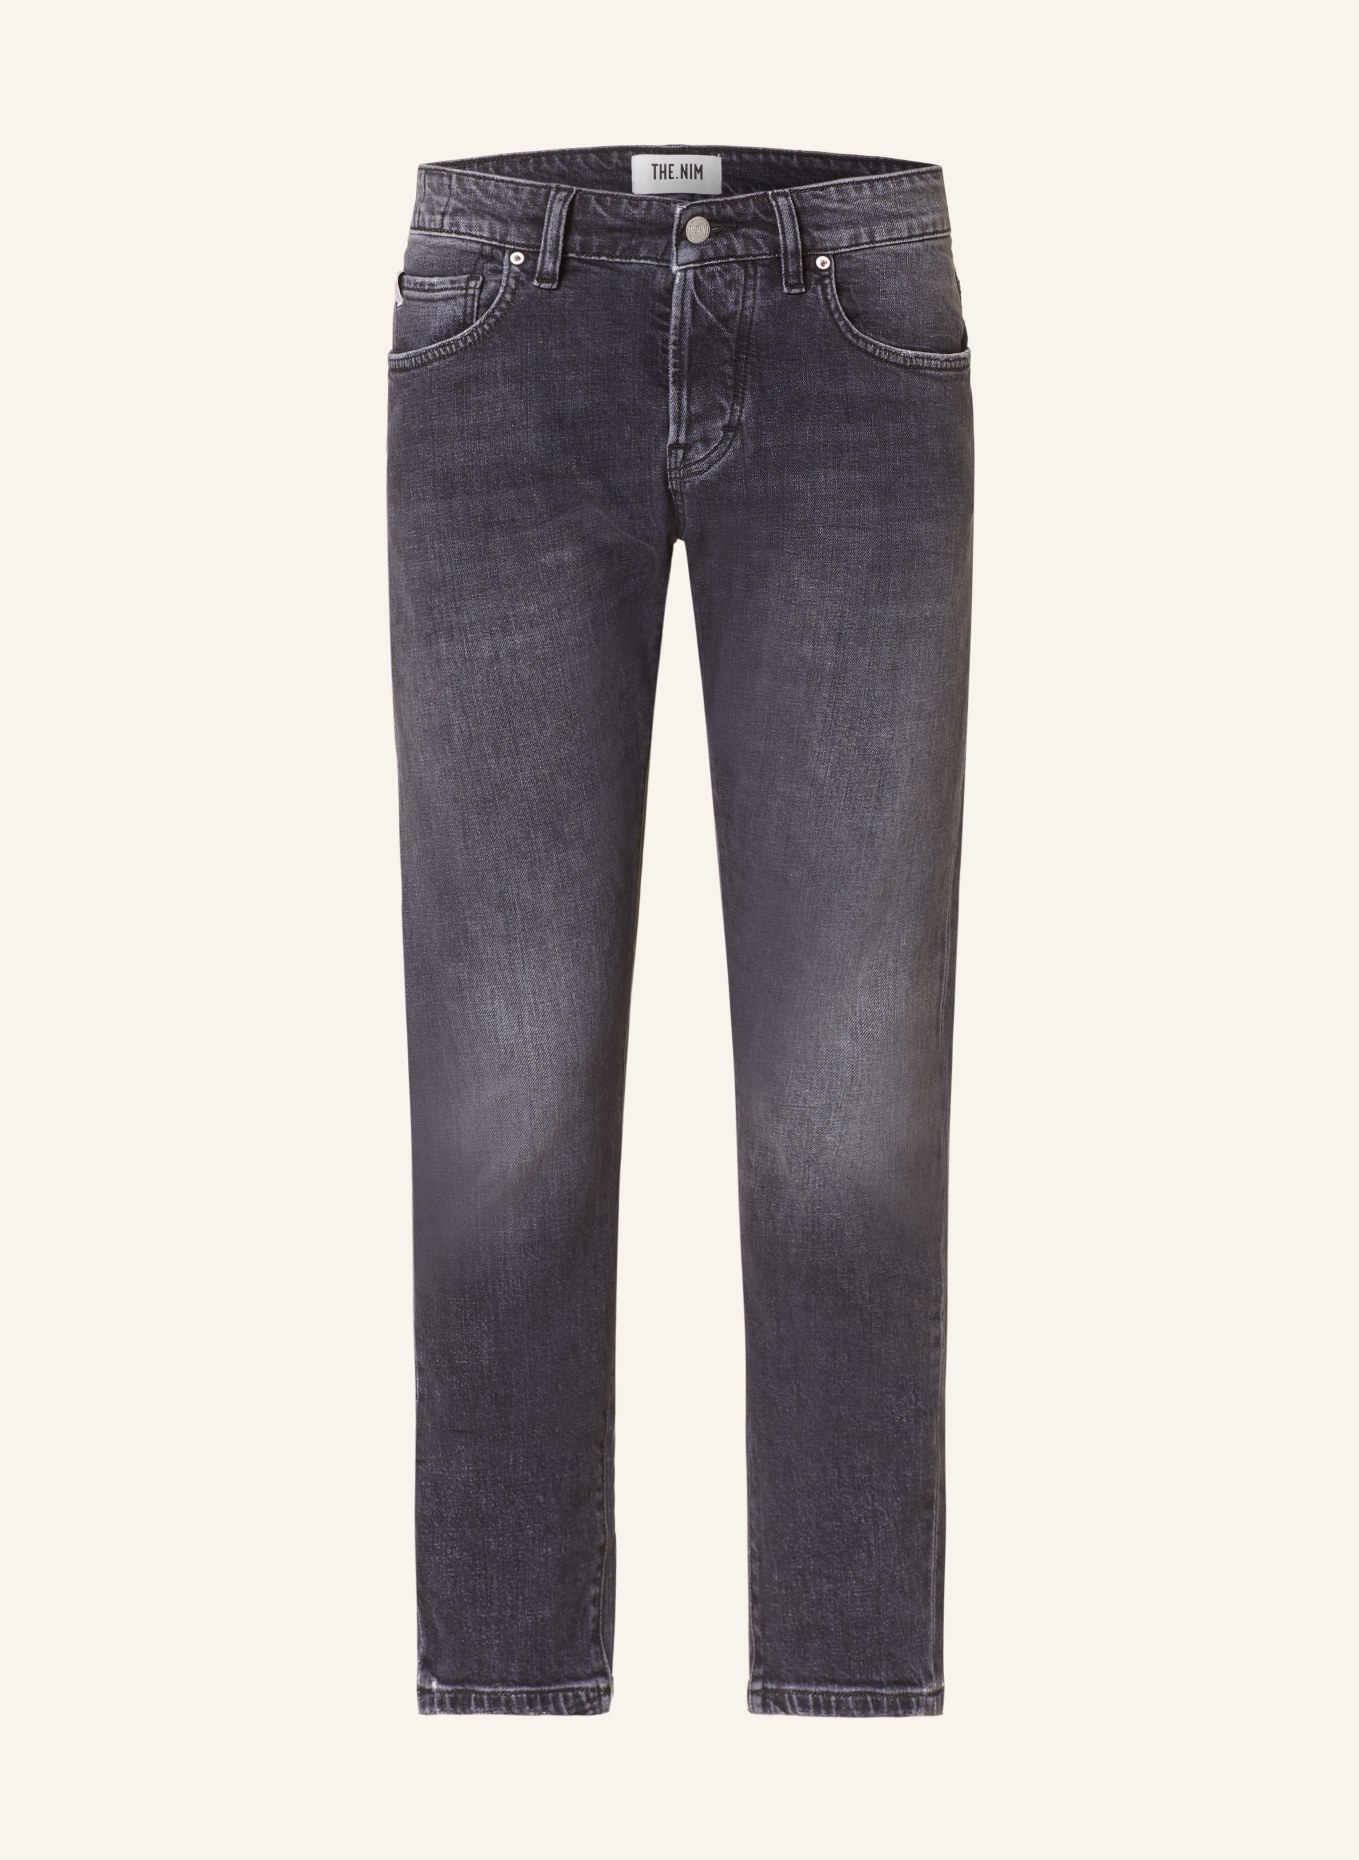 THE.NIM STANDARD Jeans DYLAN Slim Fit, Farbe: W755-BLK COMFORT BLACK DENIM (Bild 1)